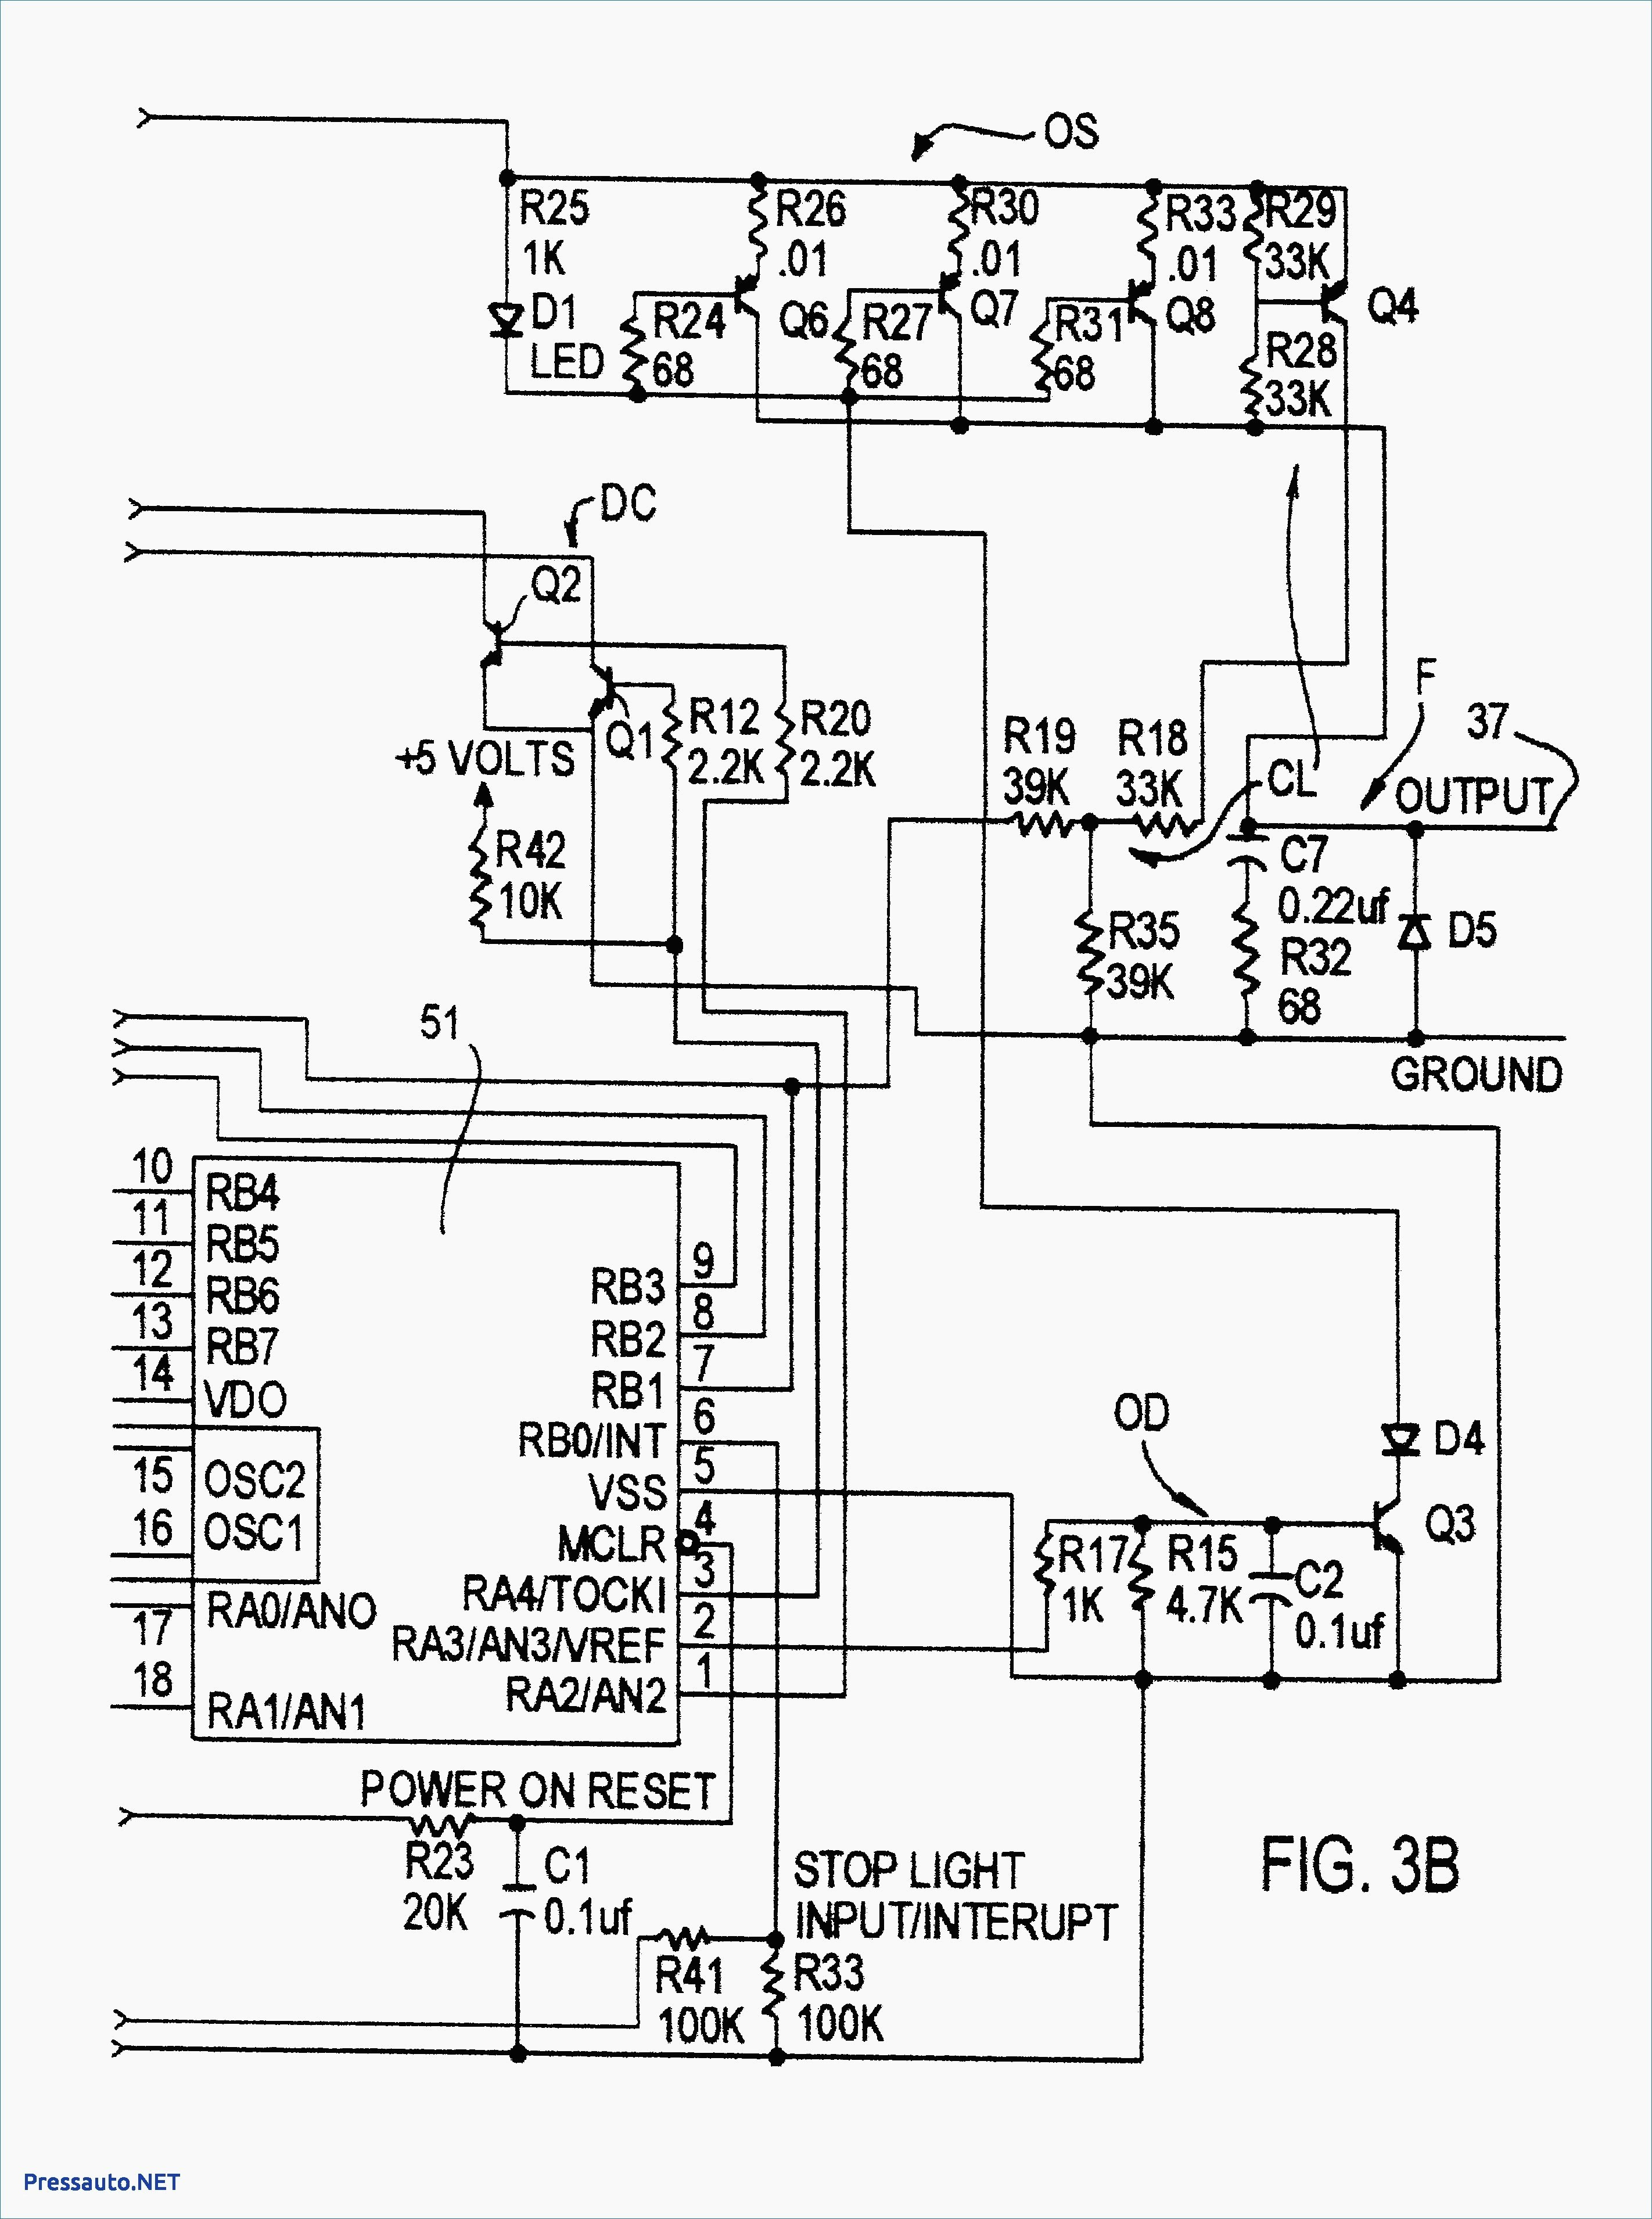 Fuse Box 2001 Chevy Blazer - Wiring Diagram